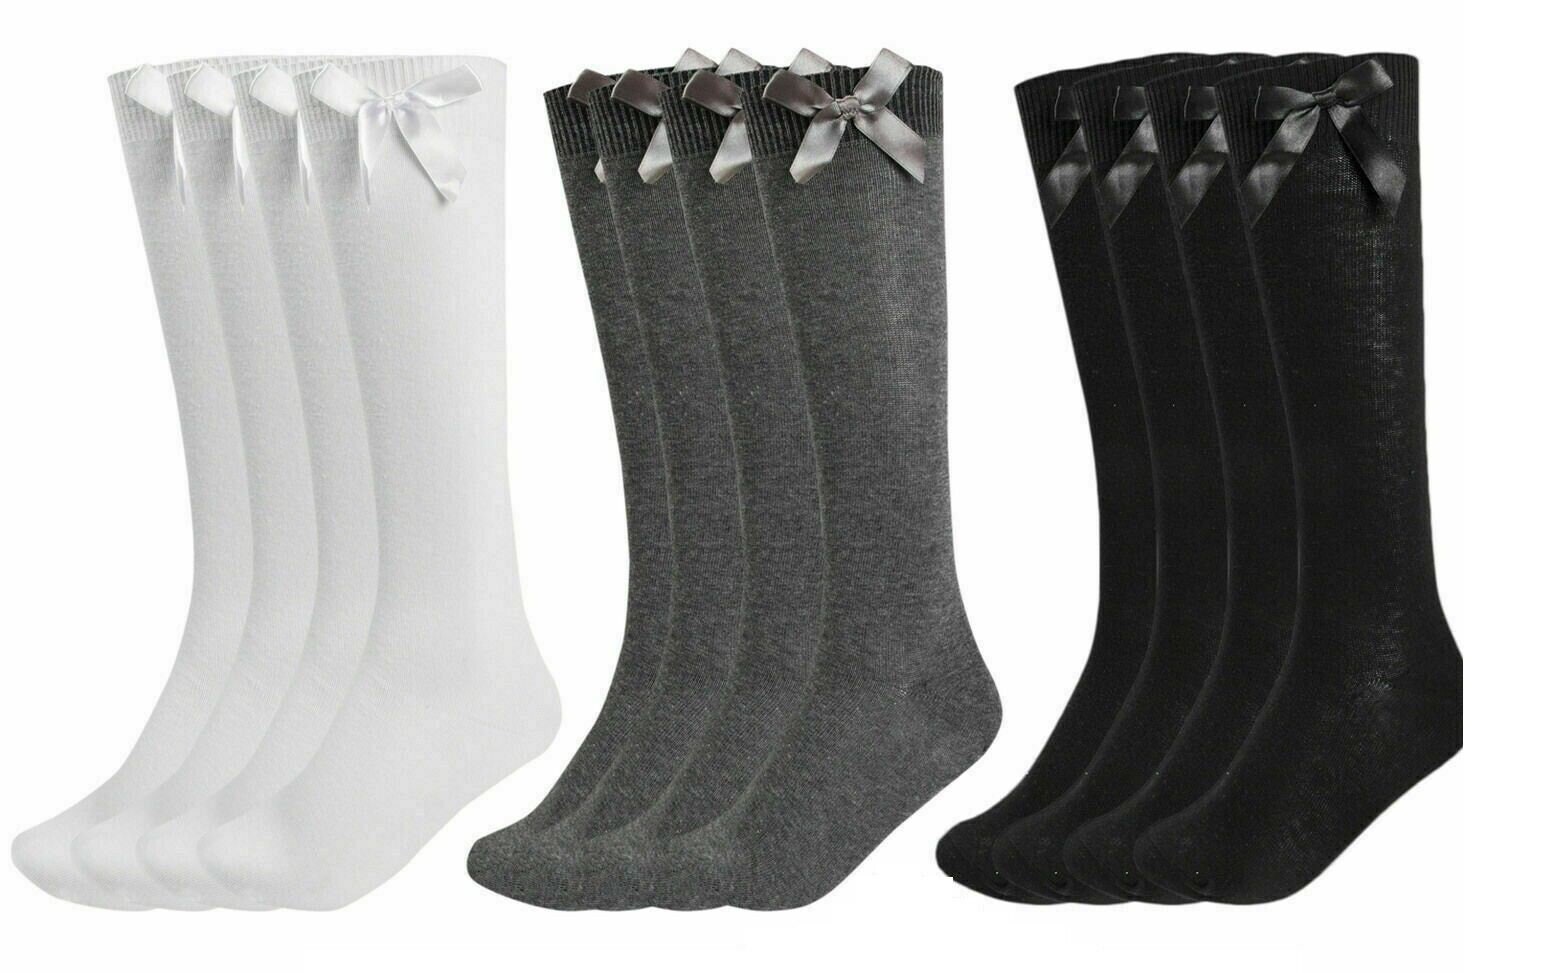 6 X Pairs Of Kids Girls Knee High School Socks With Matching Bow Black Navy Grey White 